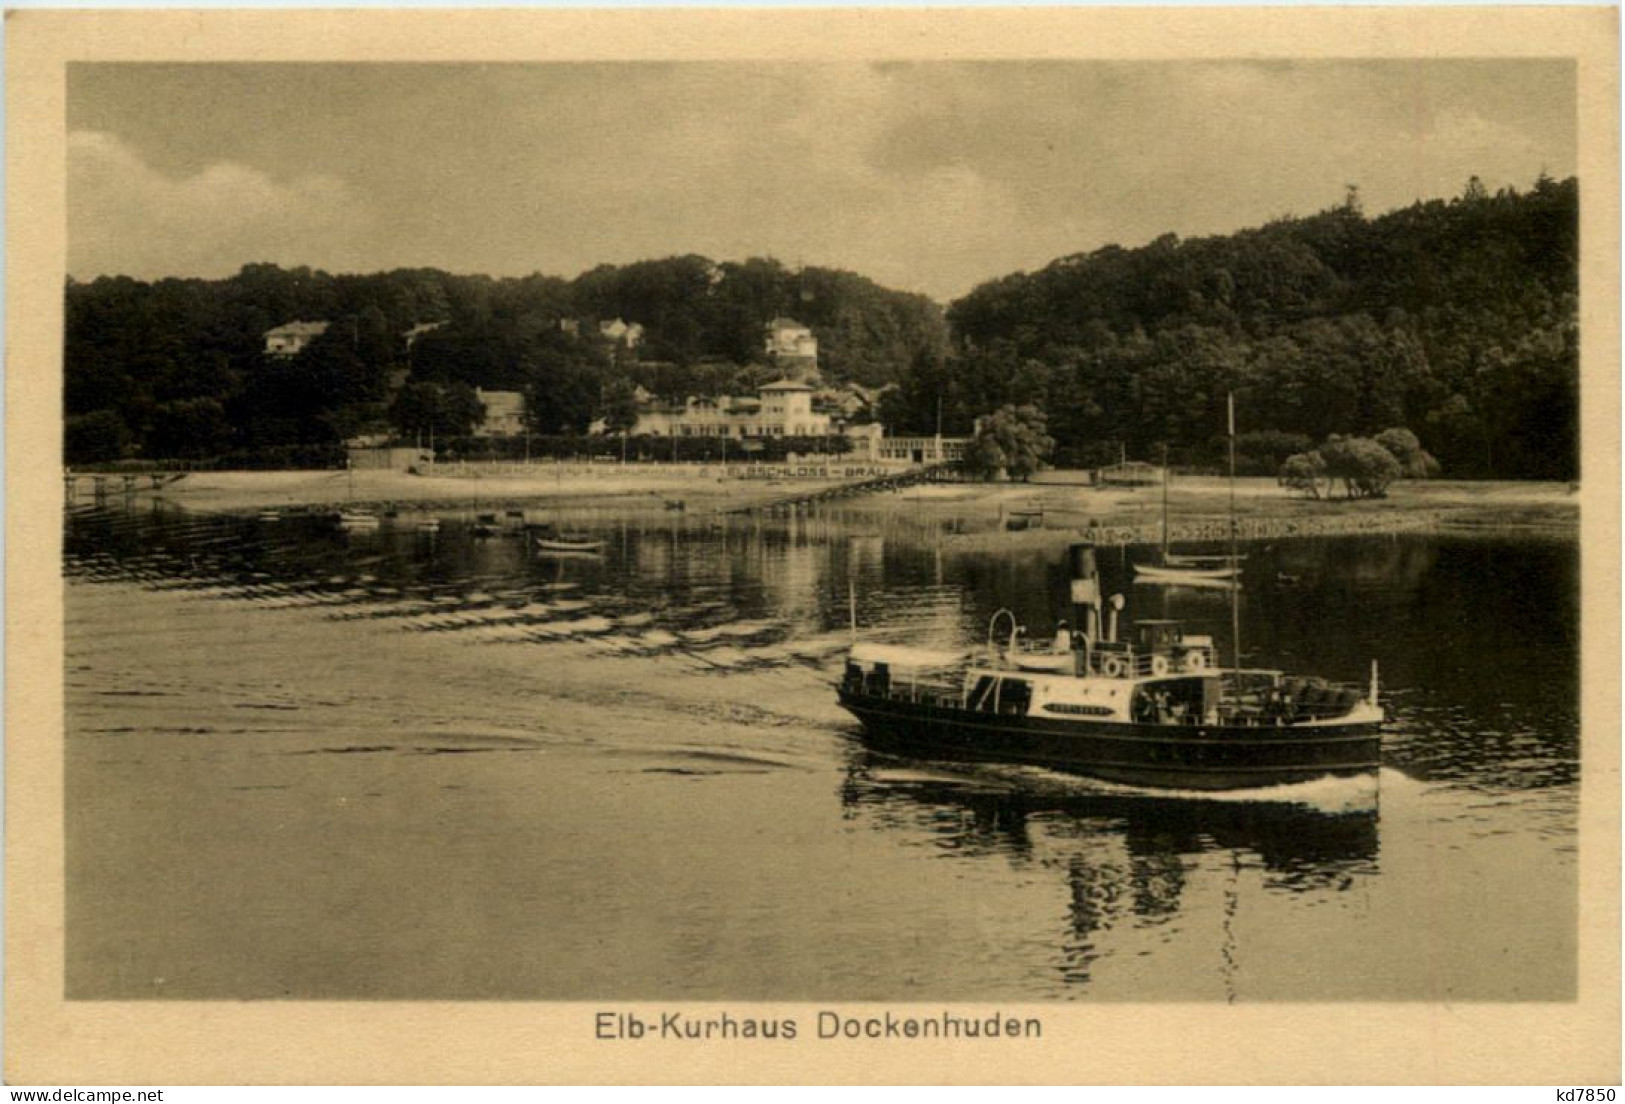 Elb-Kurhaus Dockenhuden - Altona